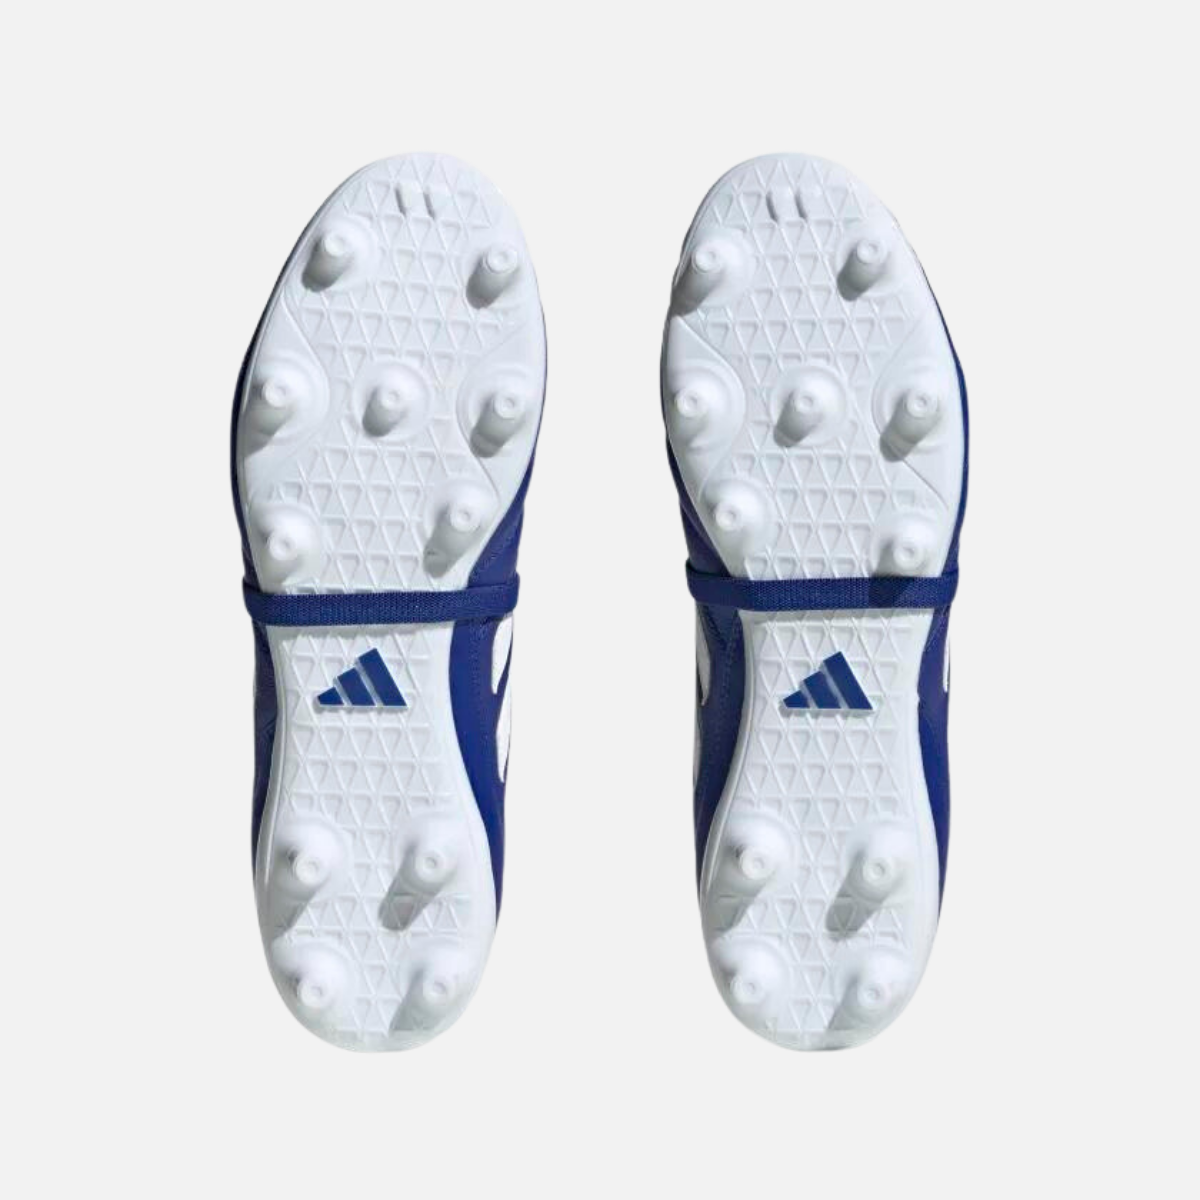 Adidas Copa Gloro Firm Ground Football Shoes -Semi Lucid Blue/Cloud White/Semi Lucid Blue